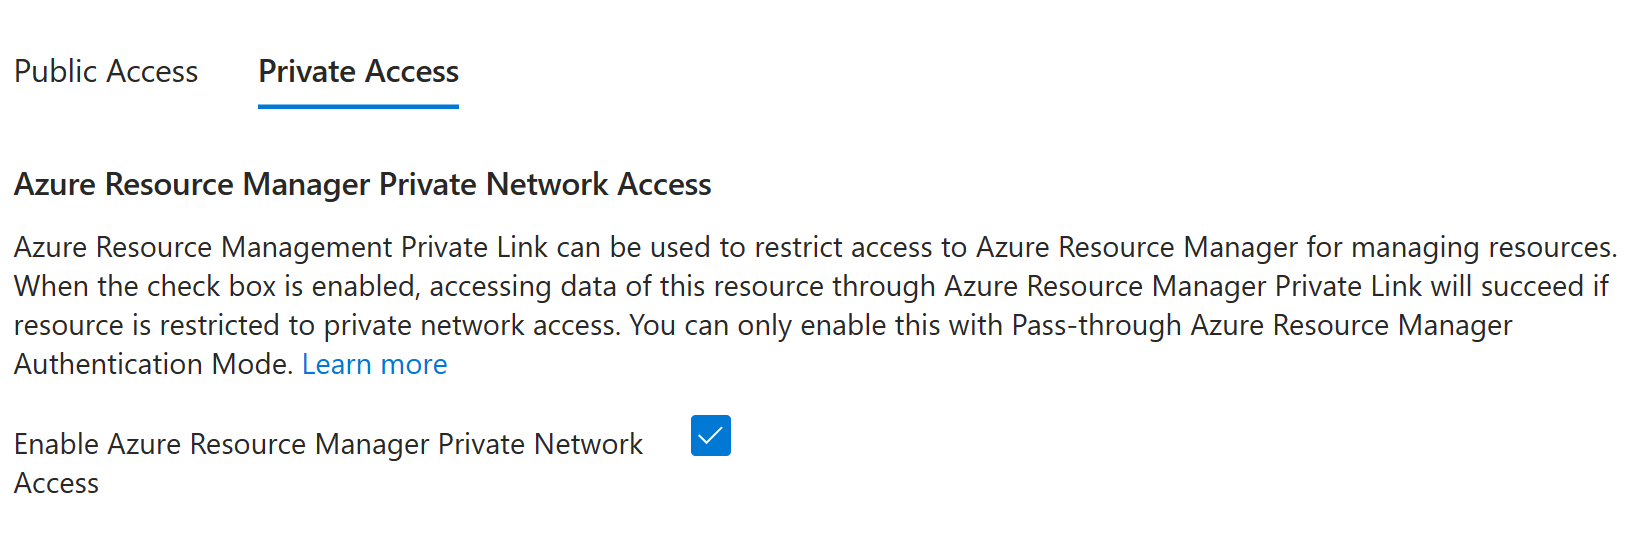 Azure Resource Manager 프라이빗 액세스 사용이 선택되어 있는 것을 보여 주는 스크린샷